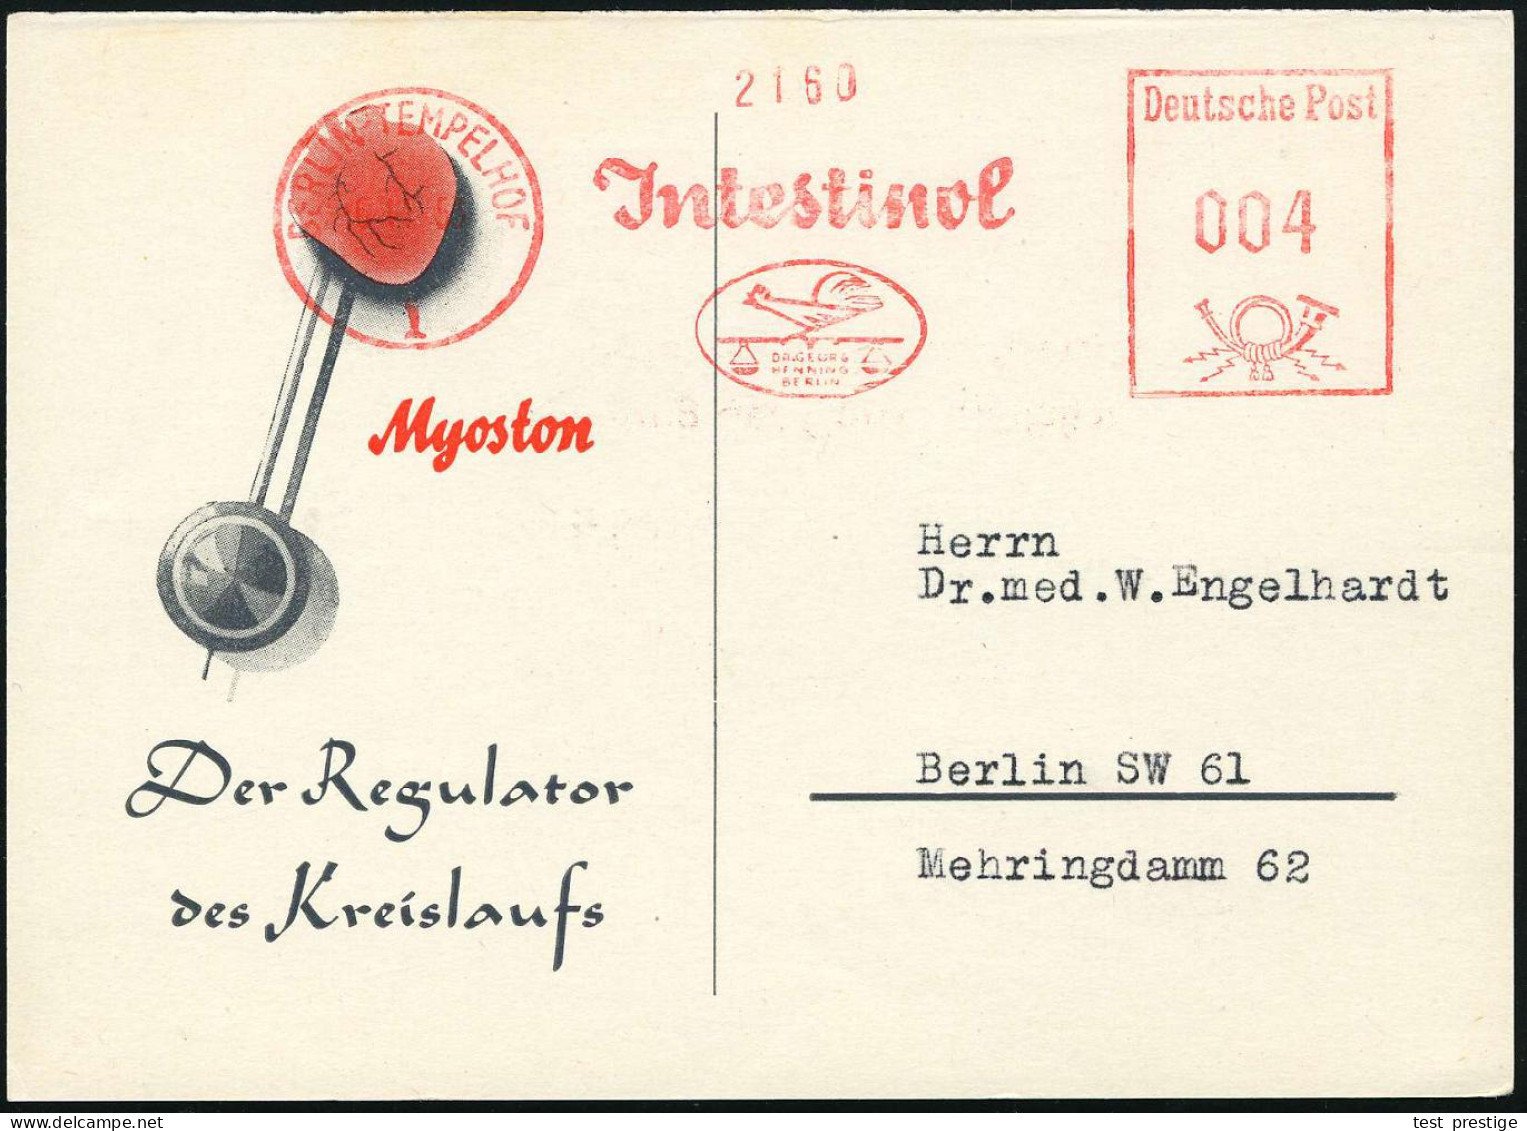 BERLIN-TEMPELHOF/ 1/ Jntestinol.. 1953 (16.11.) AFS (Logo: Hahn Auf Waage) Color-Reklame-Kt.: Myoston.. (Herz Als Uhr) O - Medizin